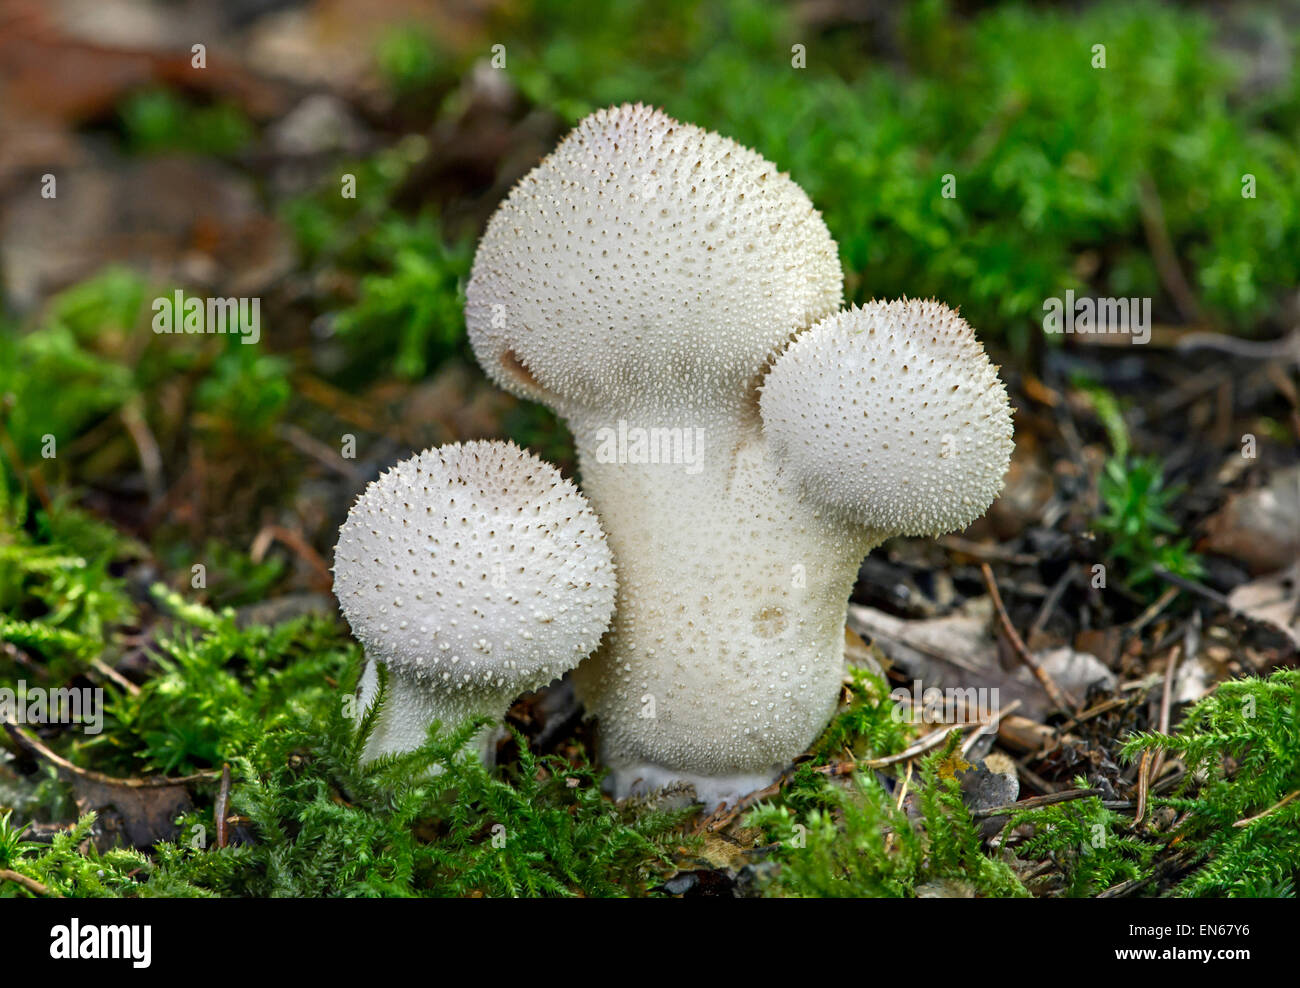 Gemeinsame puffball (lycoperdon perlatum) mit hellen, kurze kegelförmigen  Stacheln, saprobic Pilze, Essbar, der Schweiz Stockfotografie - Alamy